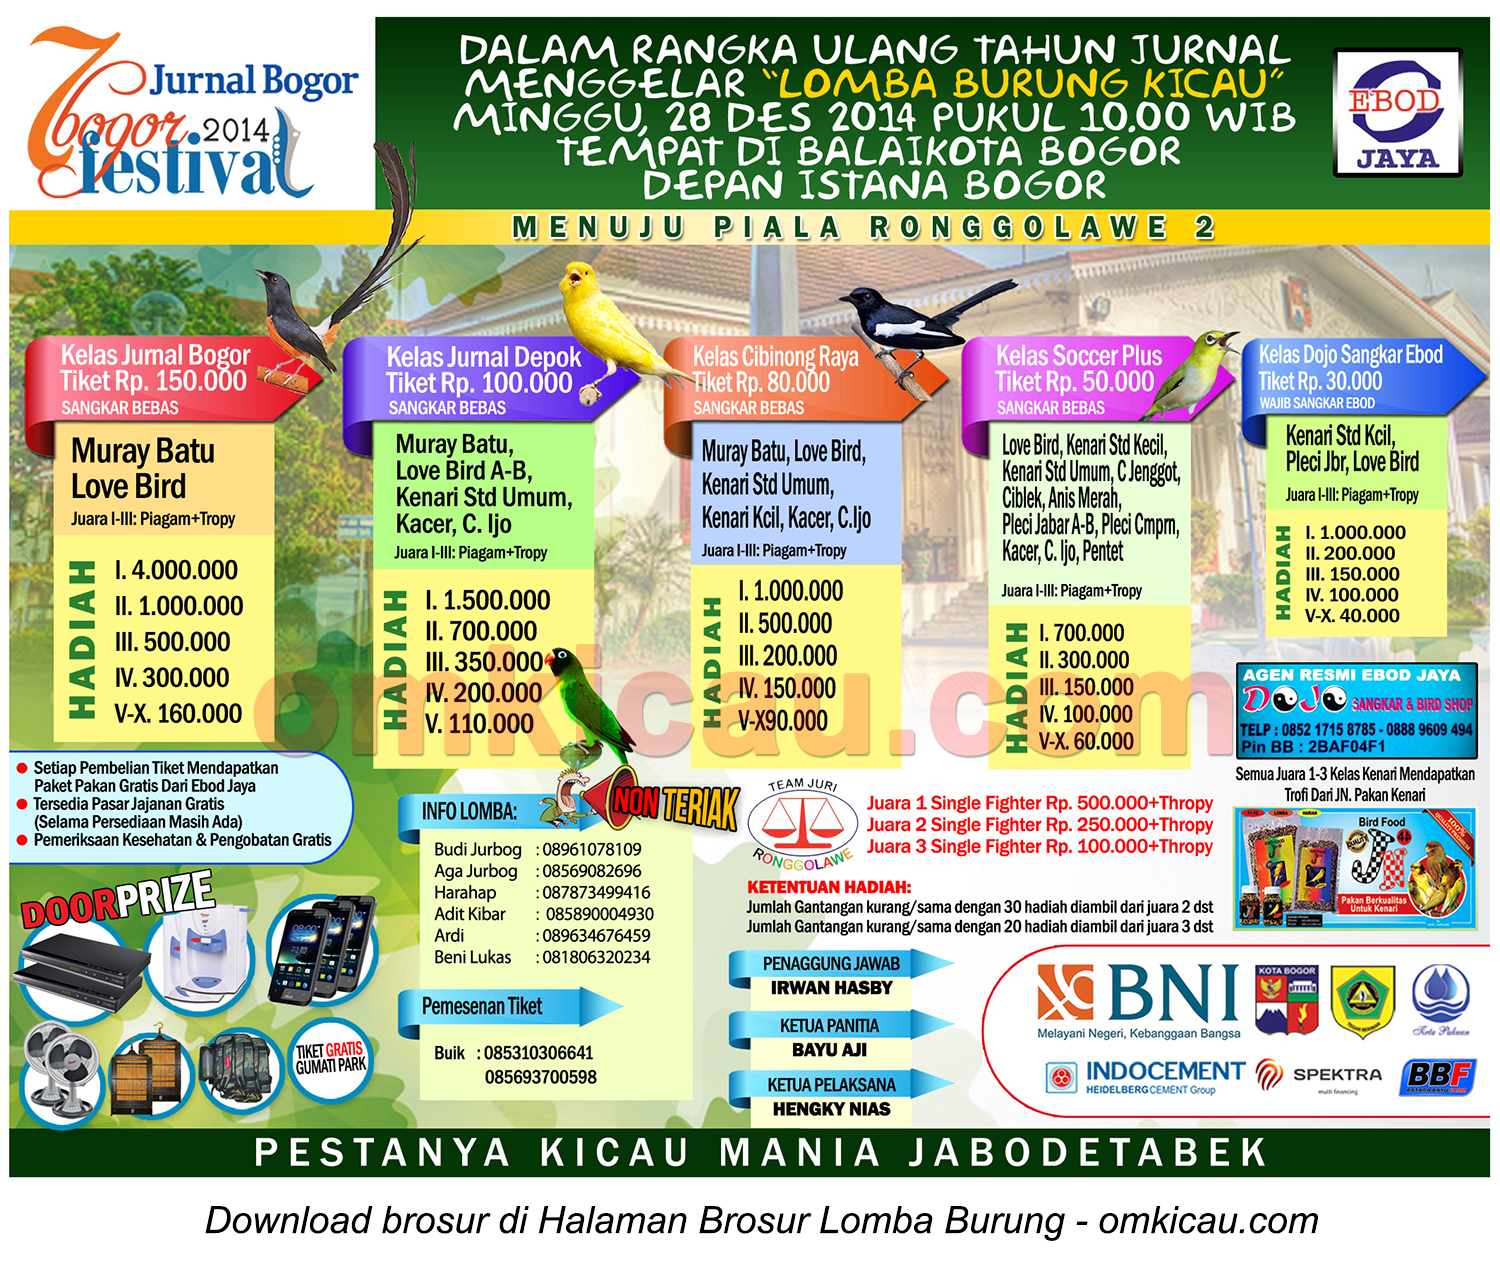 Brosur Lomba Burung Berkicau Festival HUT 7 Jurnal Bogor, 28 Desember 2014